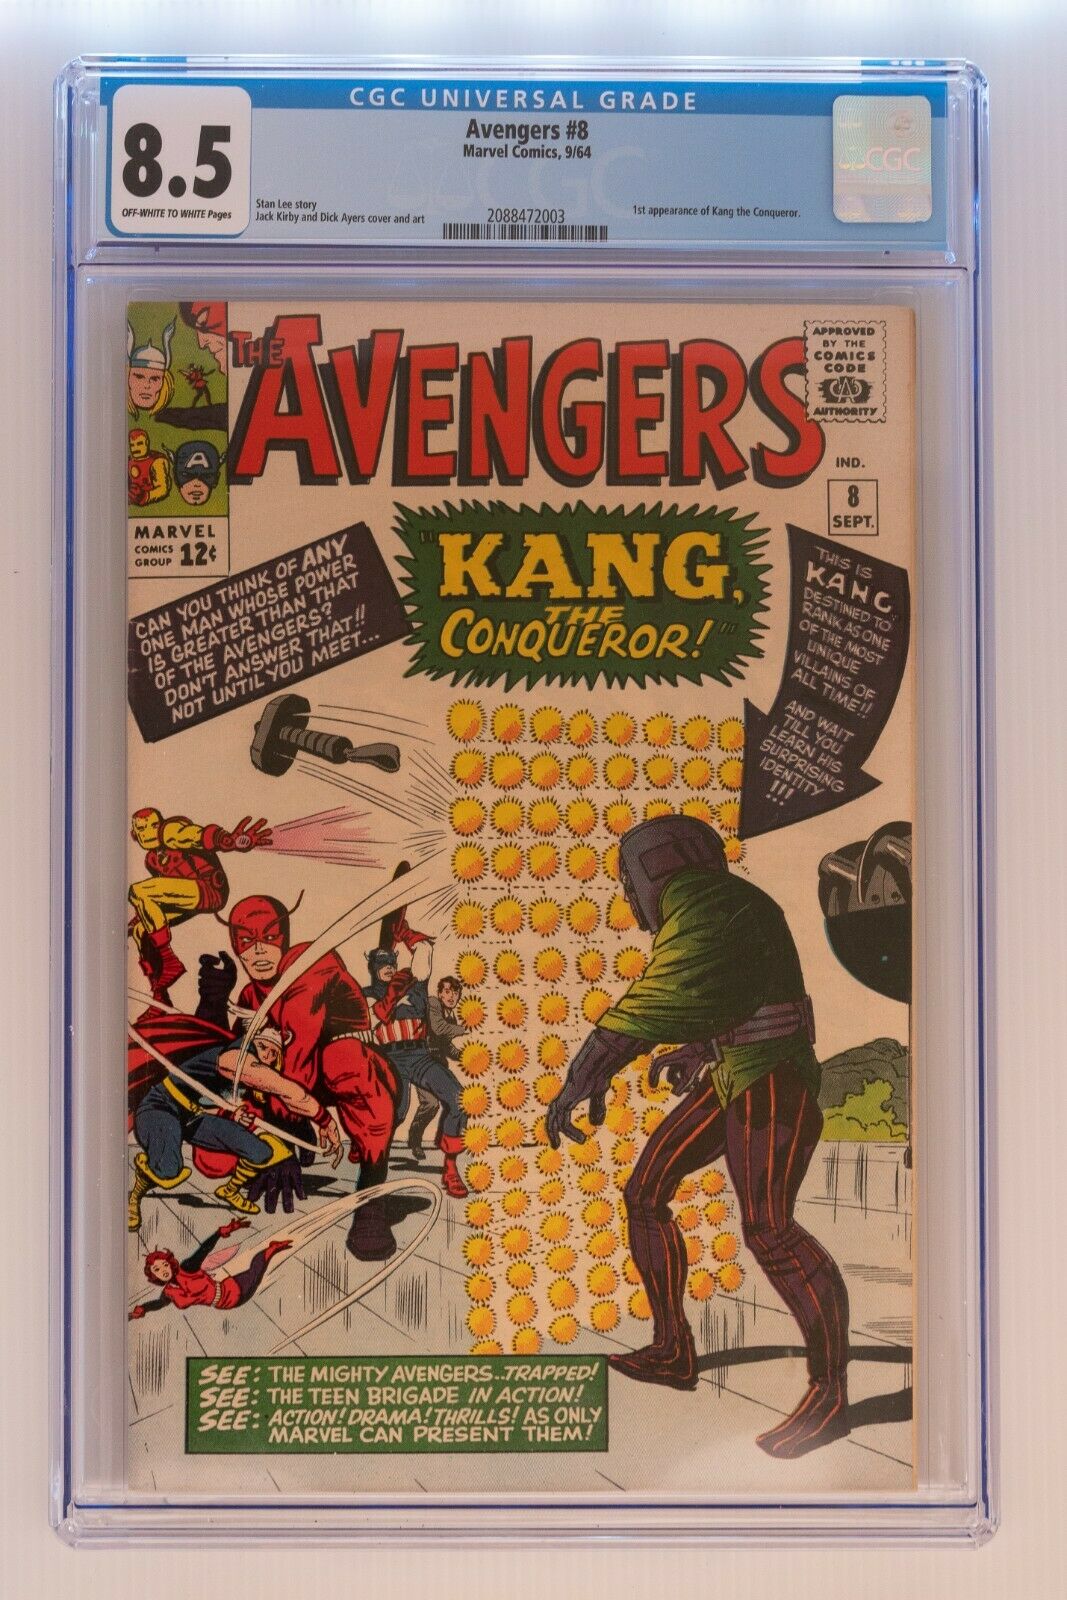 Avengers Issue 8  85 CGC Grade